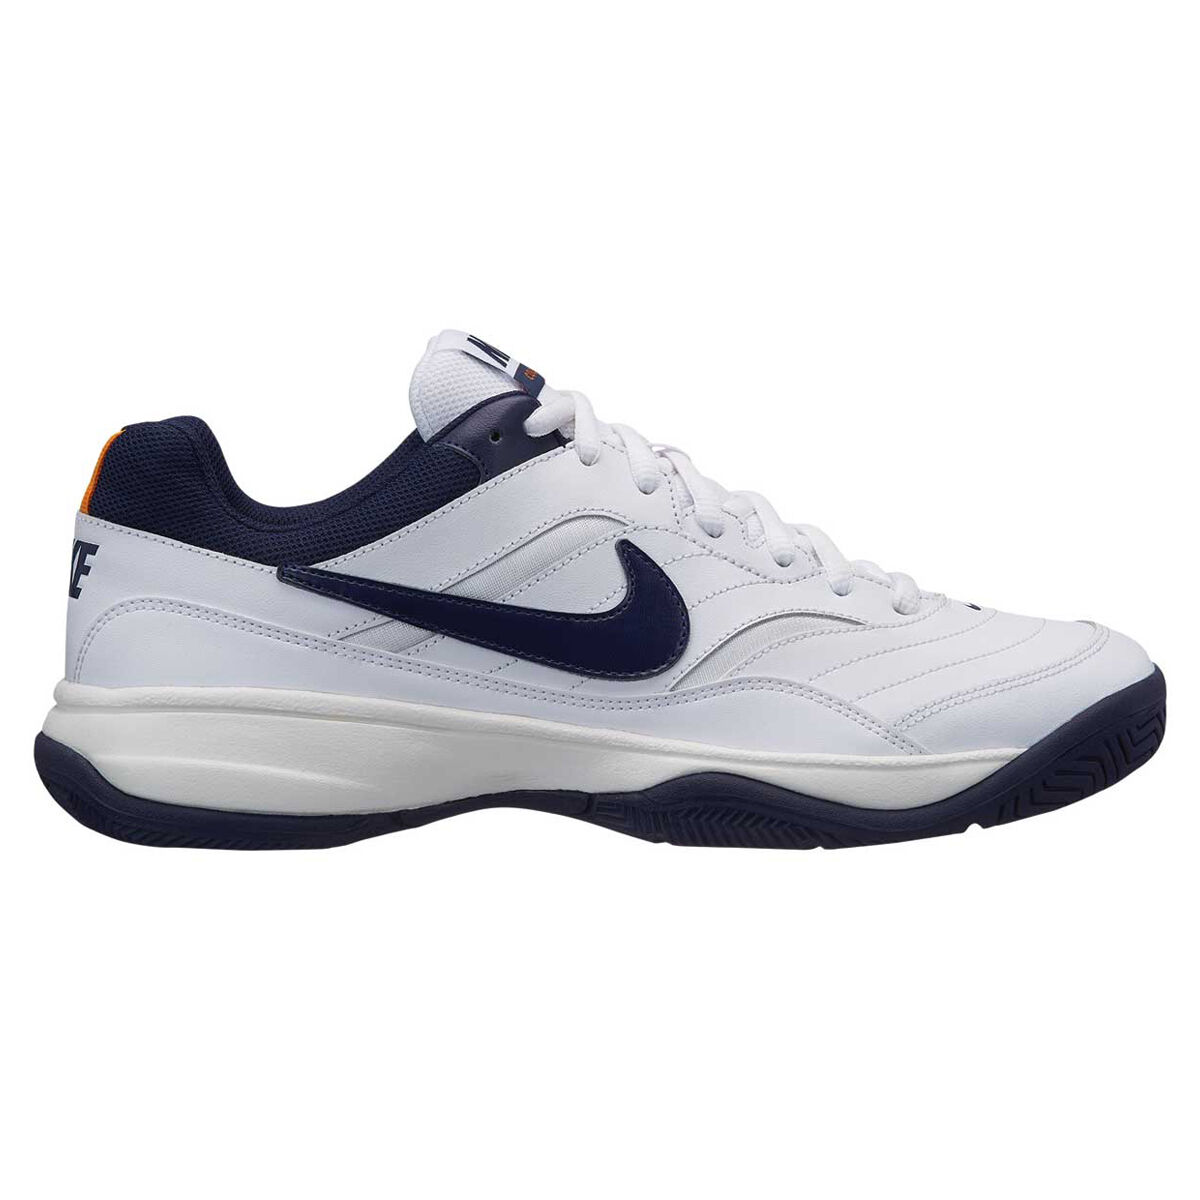 rebel sports tennis shoes